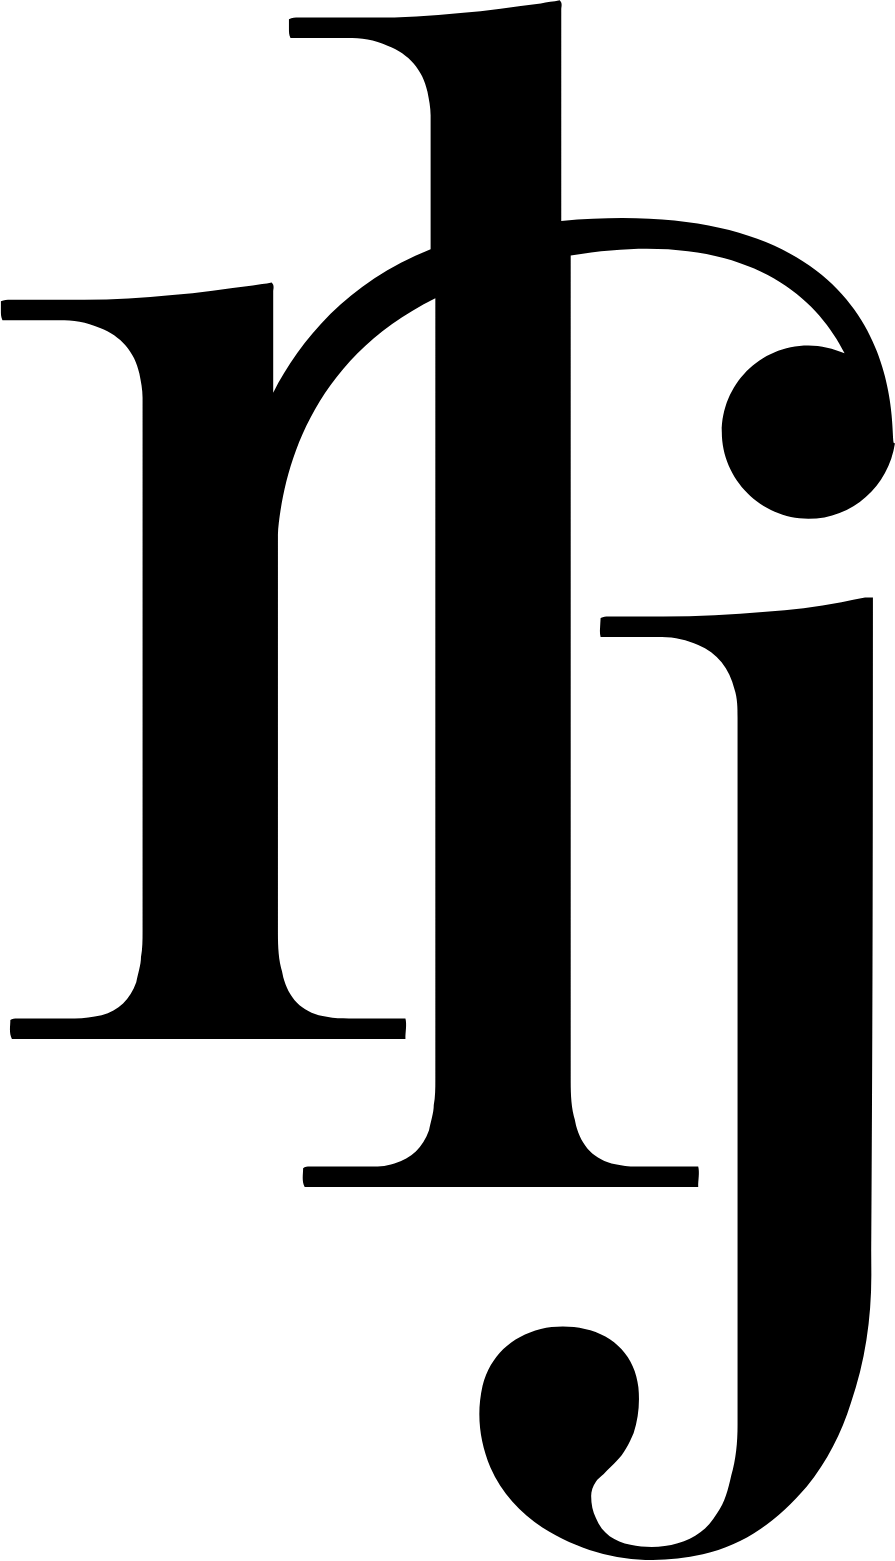 RLJ Lodging Trust Logo (transparentes PNG)